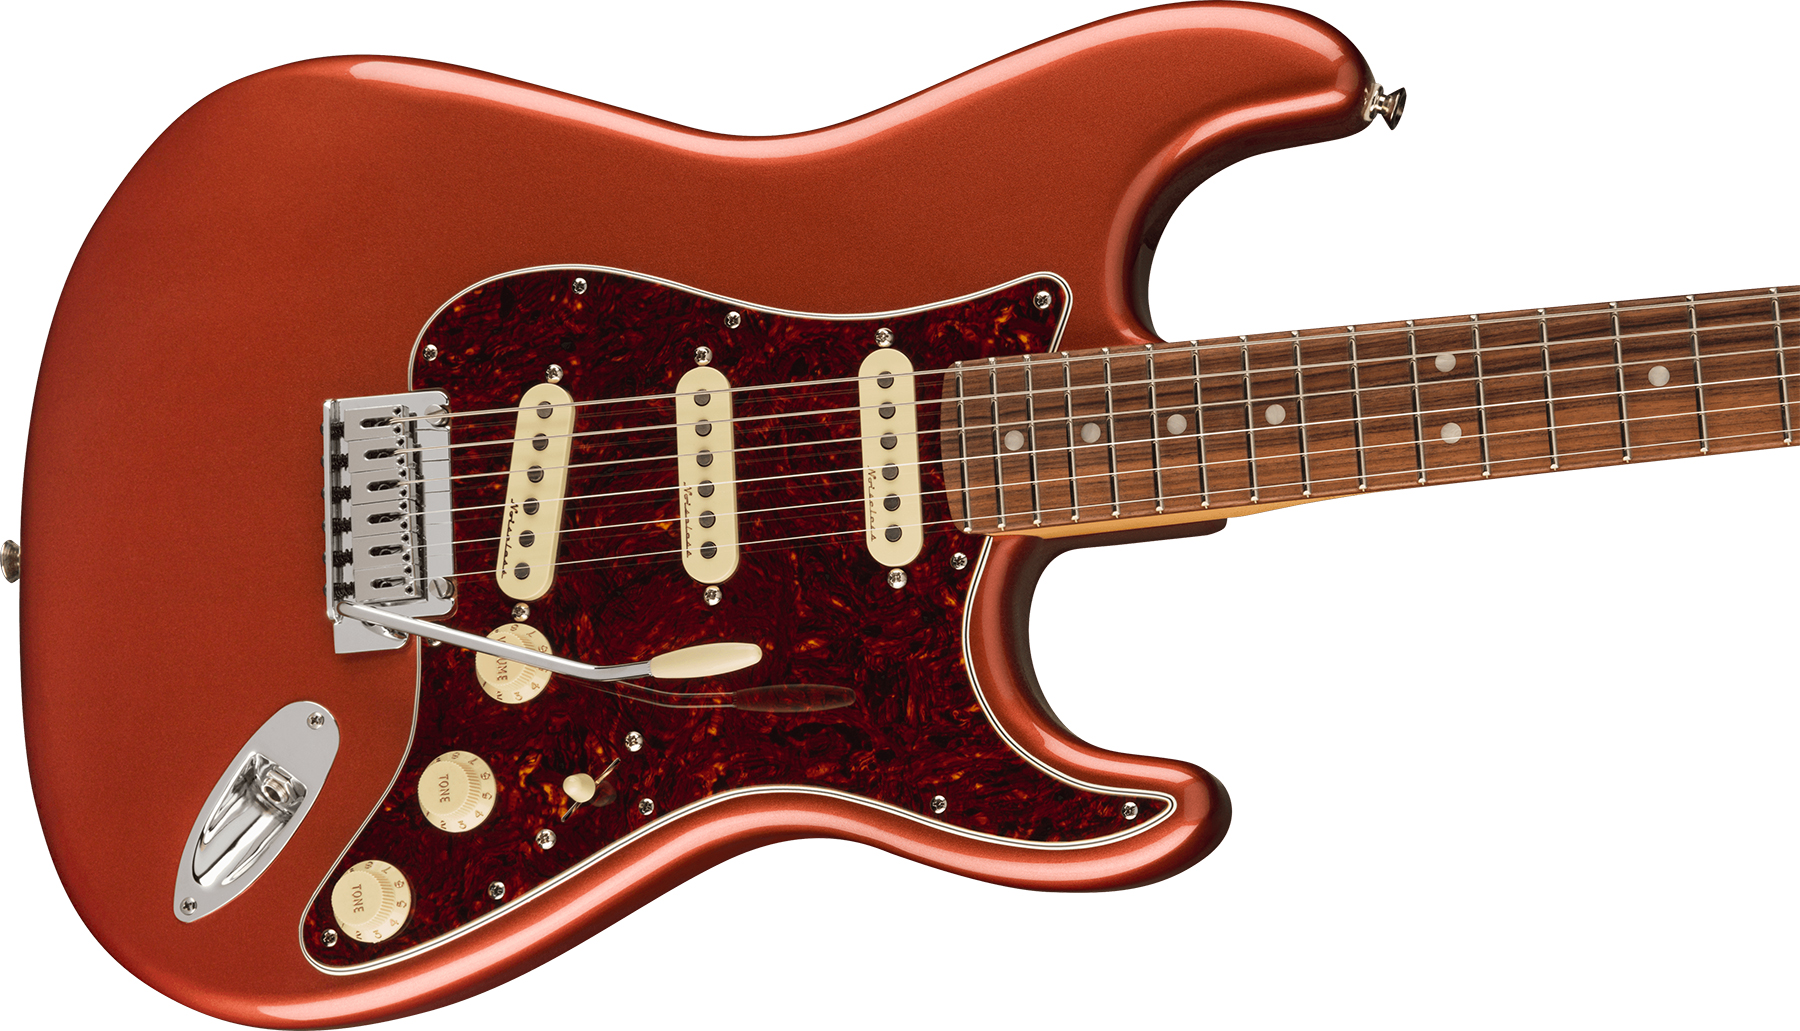 Fender Strat Player Plus Mex 3s Trem Pf - Aged Candy Apple Red - E-Gitarre in Str-Form - Variation 2